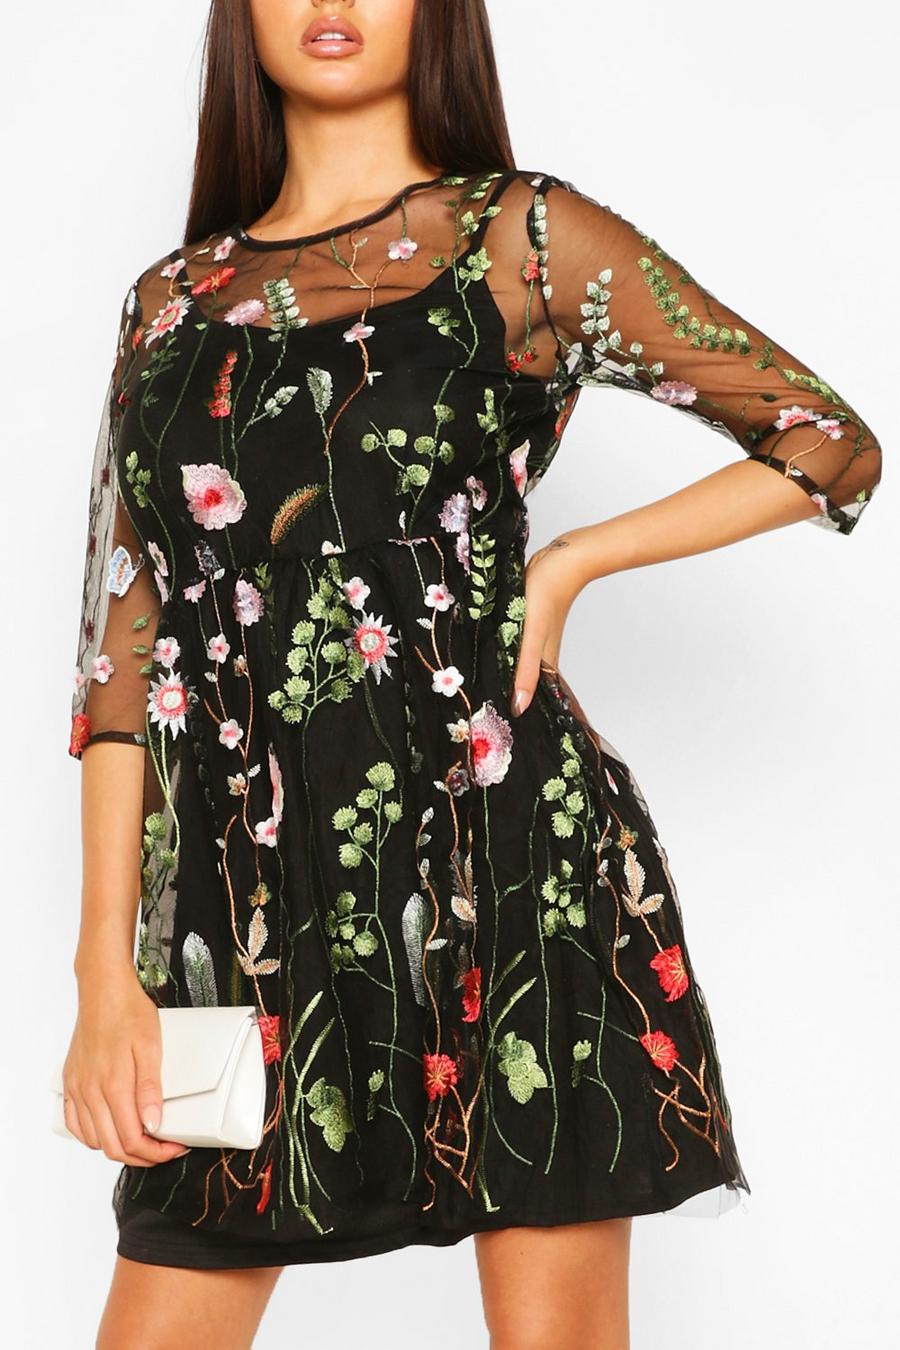 https://media.boohoo.com/i/boohoo/fzz58962_black_xl/female-black-floral-embroidery-mesh-overlay-dress/?w=900&qlt=default&fmt.jp2.qlt=70&fmt=auto&sm=fit